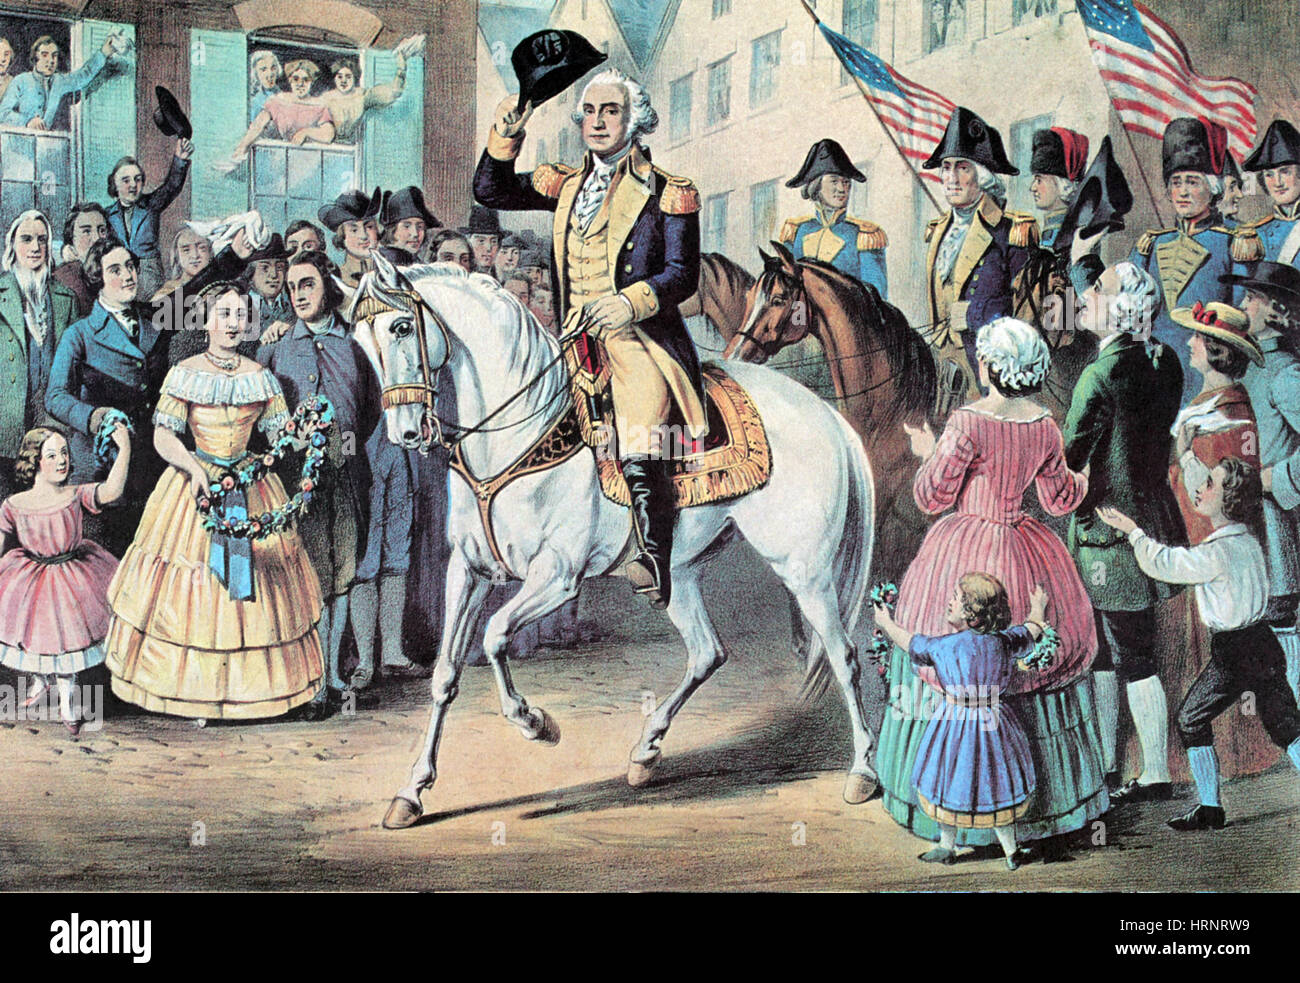 George Washington ritorno trionfale a NYC, 1783 Foto Stock